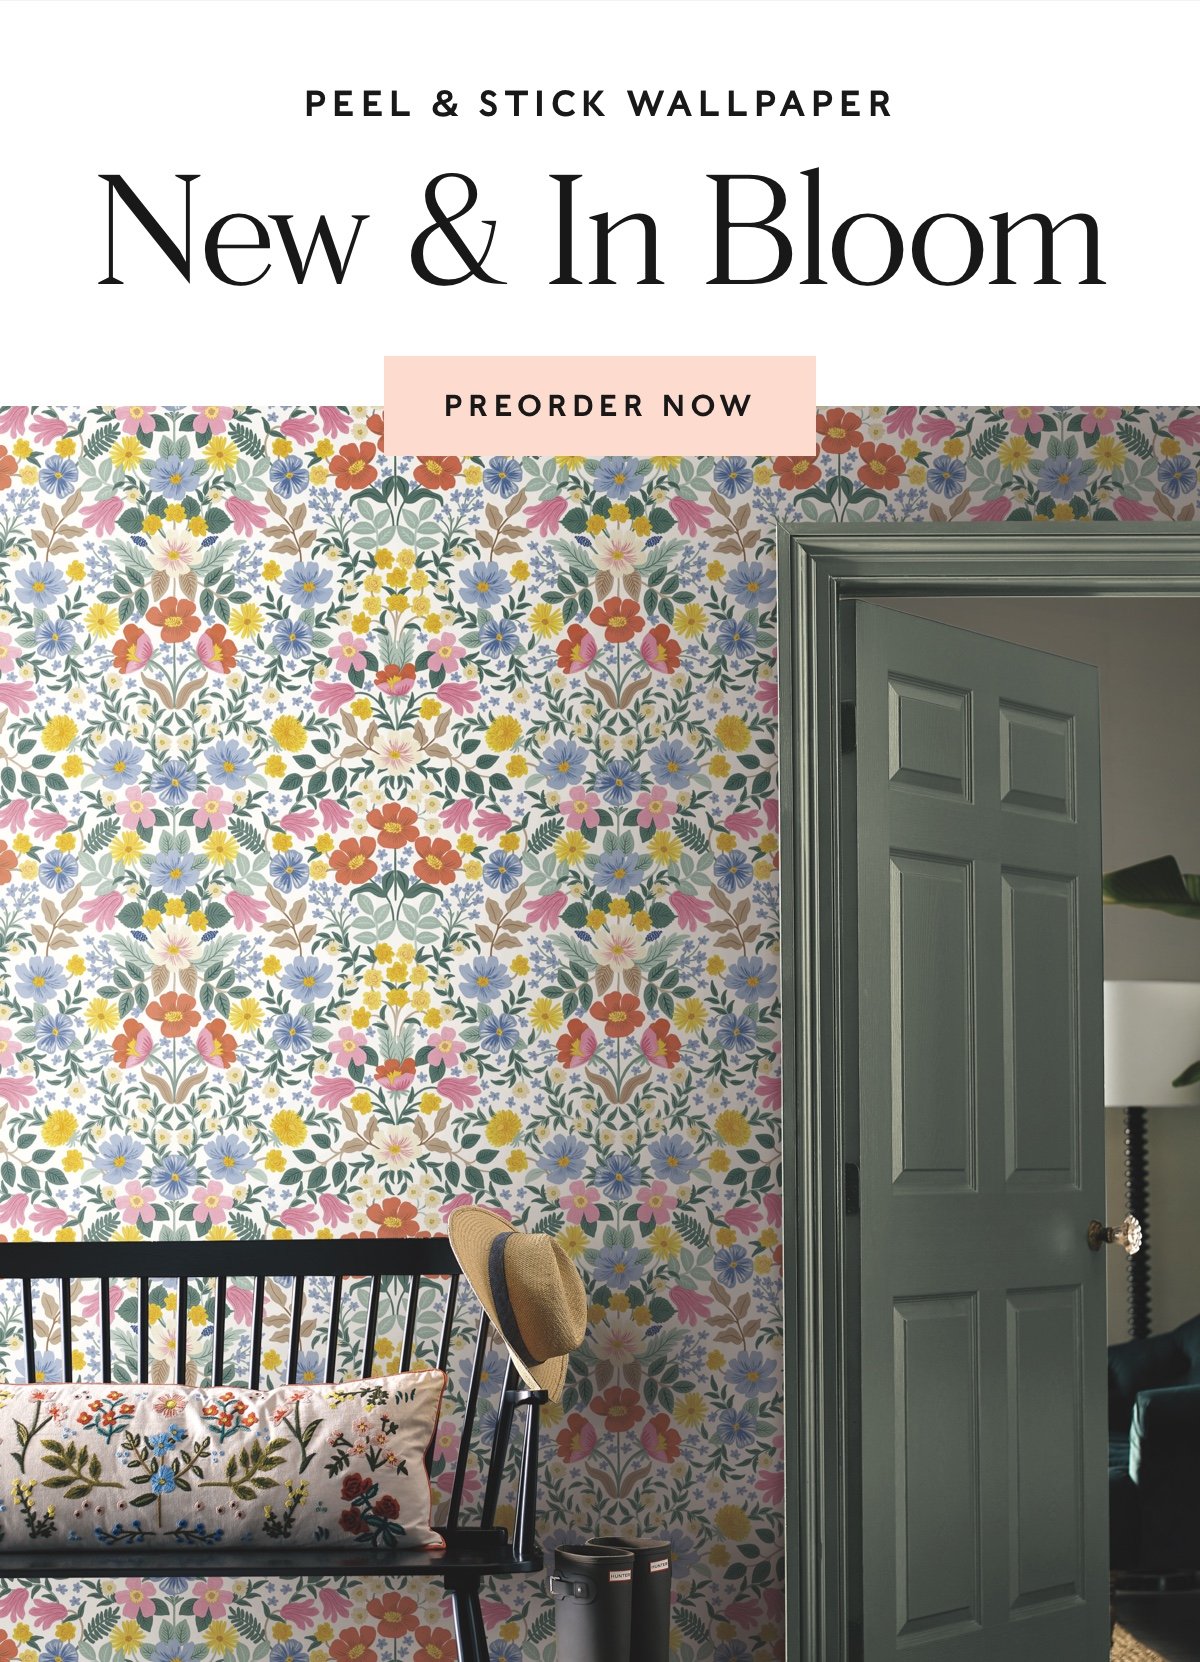 Peel & Stick Wallpaper. New & In Bloom